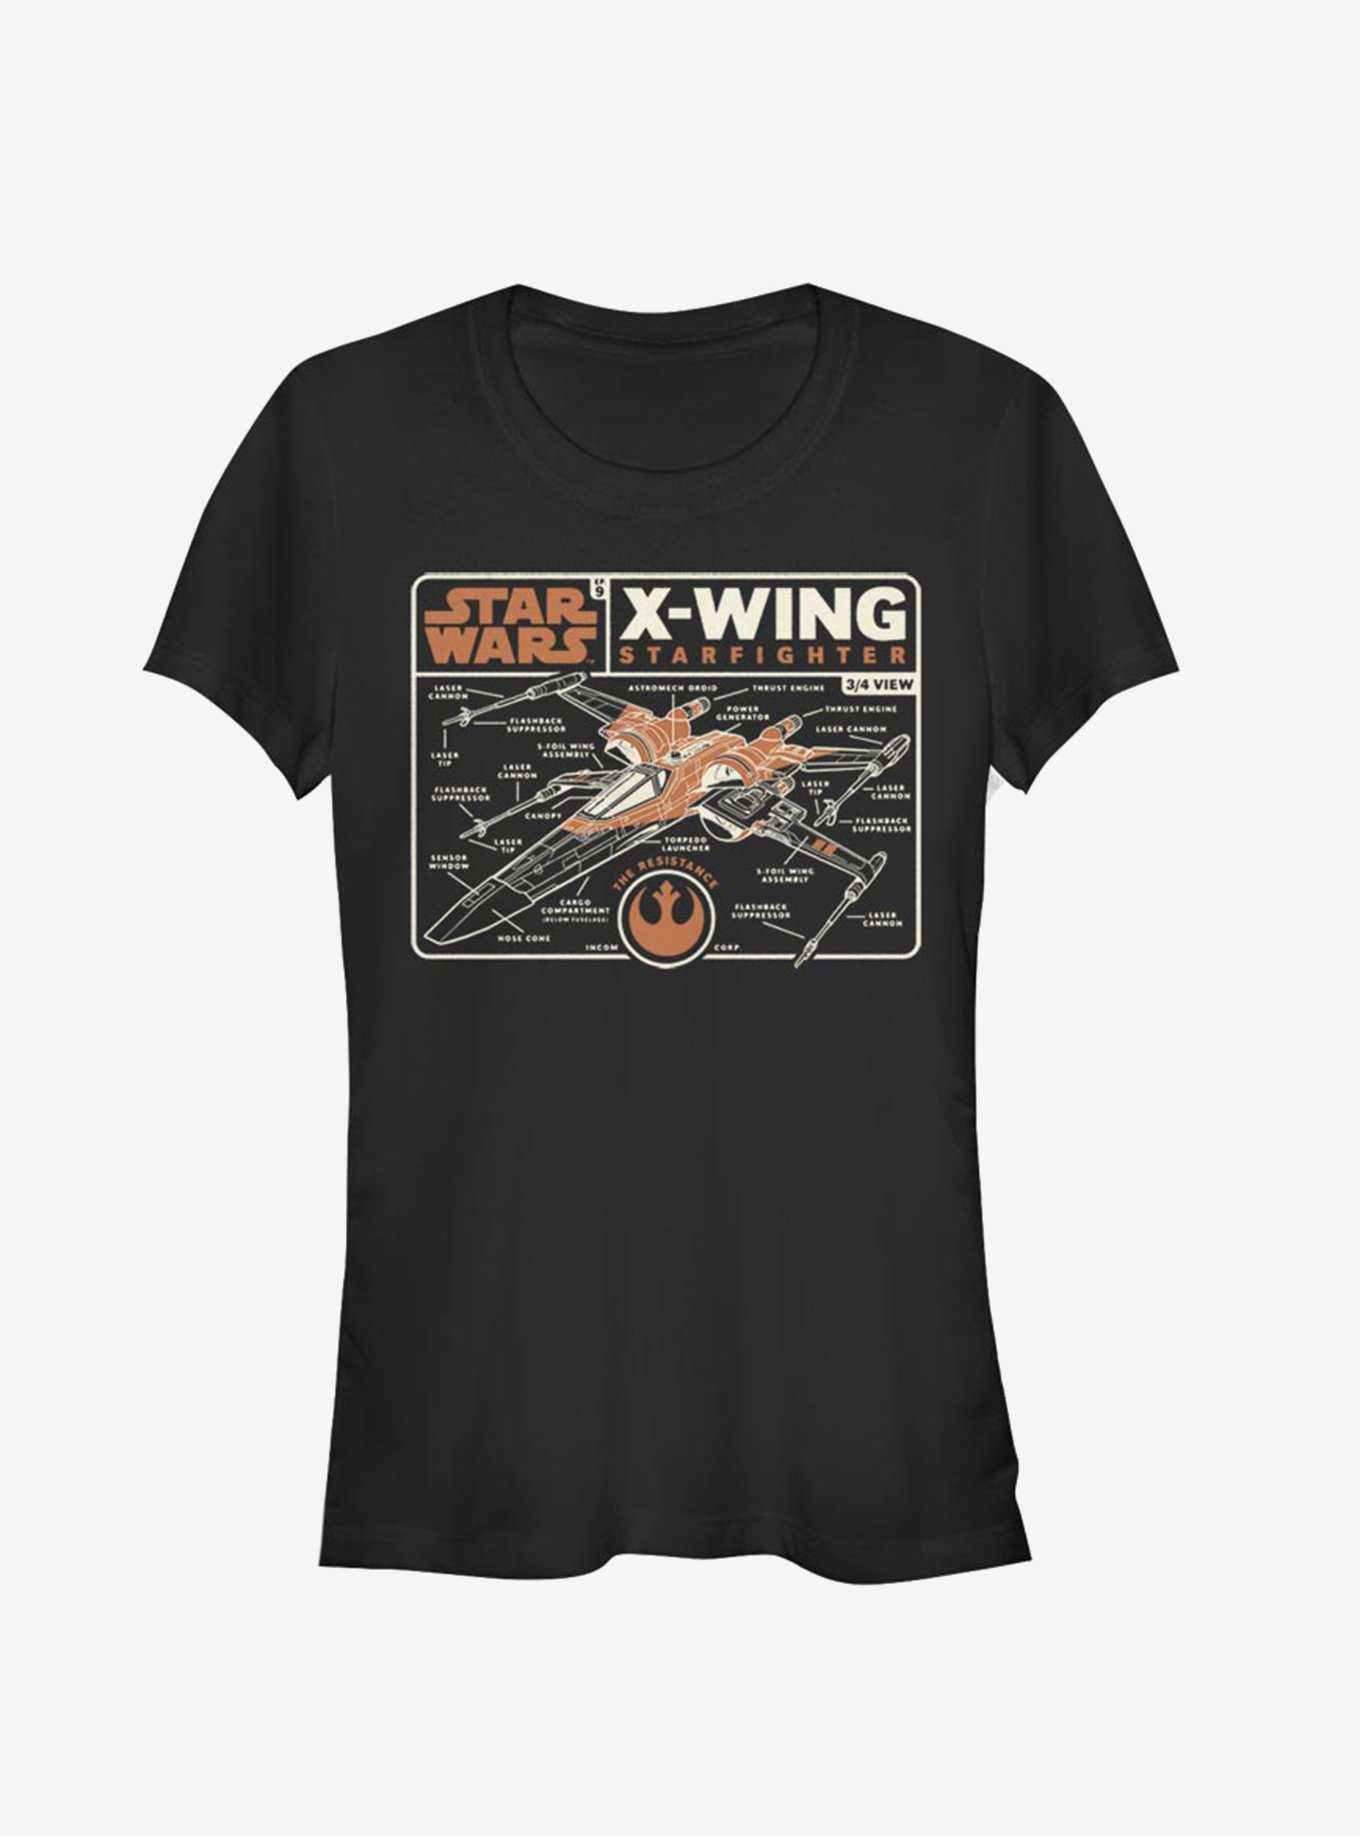 Star Wars Episode IX The Rise Of Skywalker Starfighter Schematic Girls T-Shirt, , hi-res